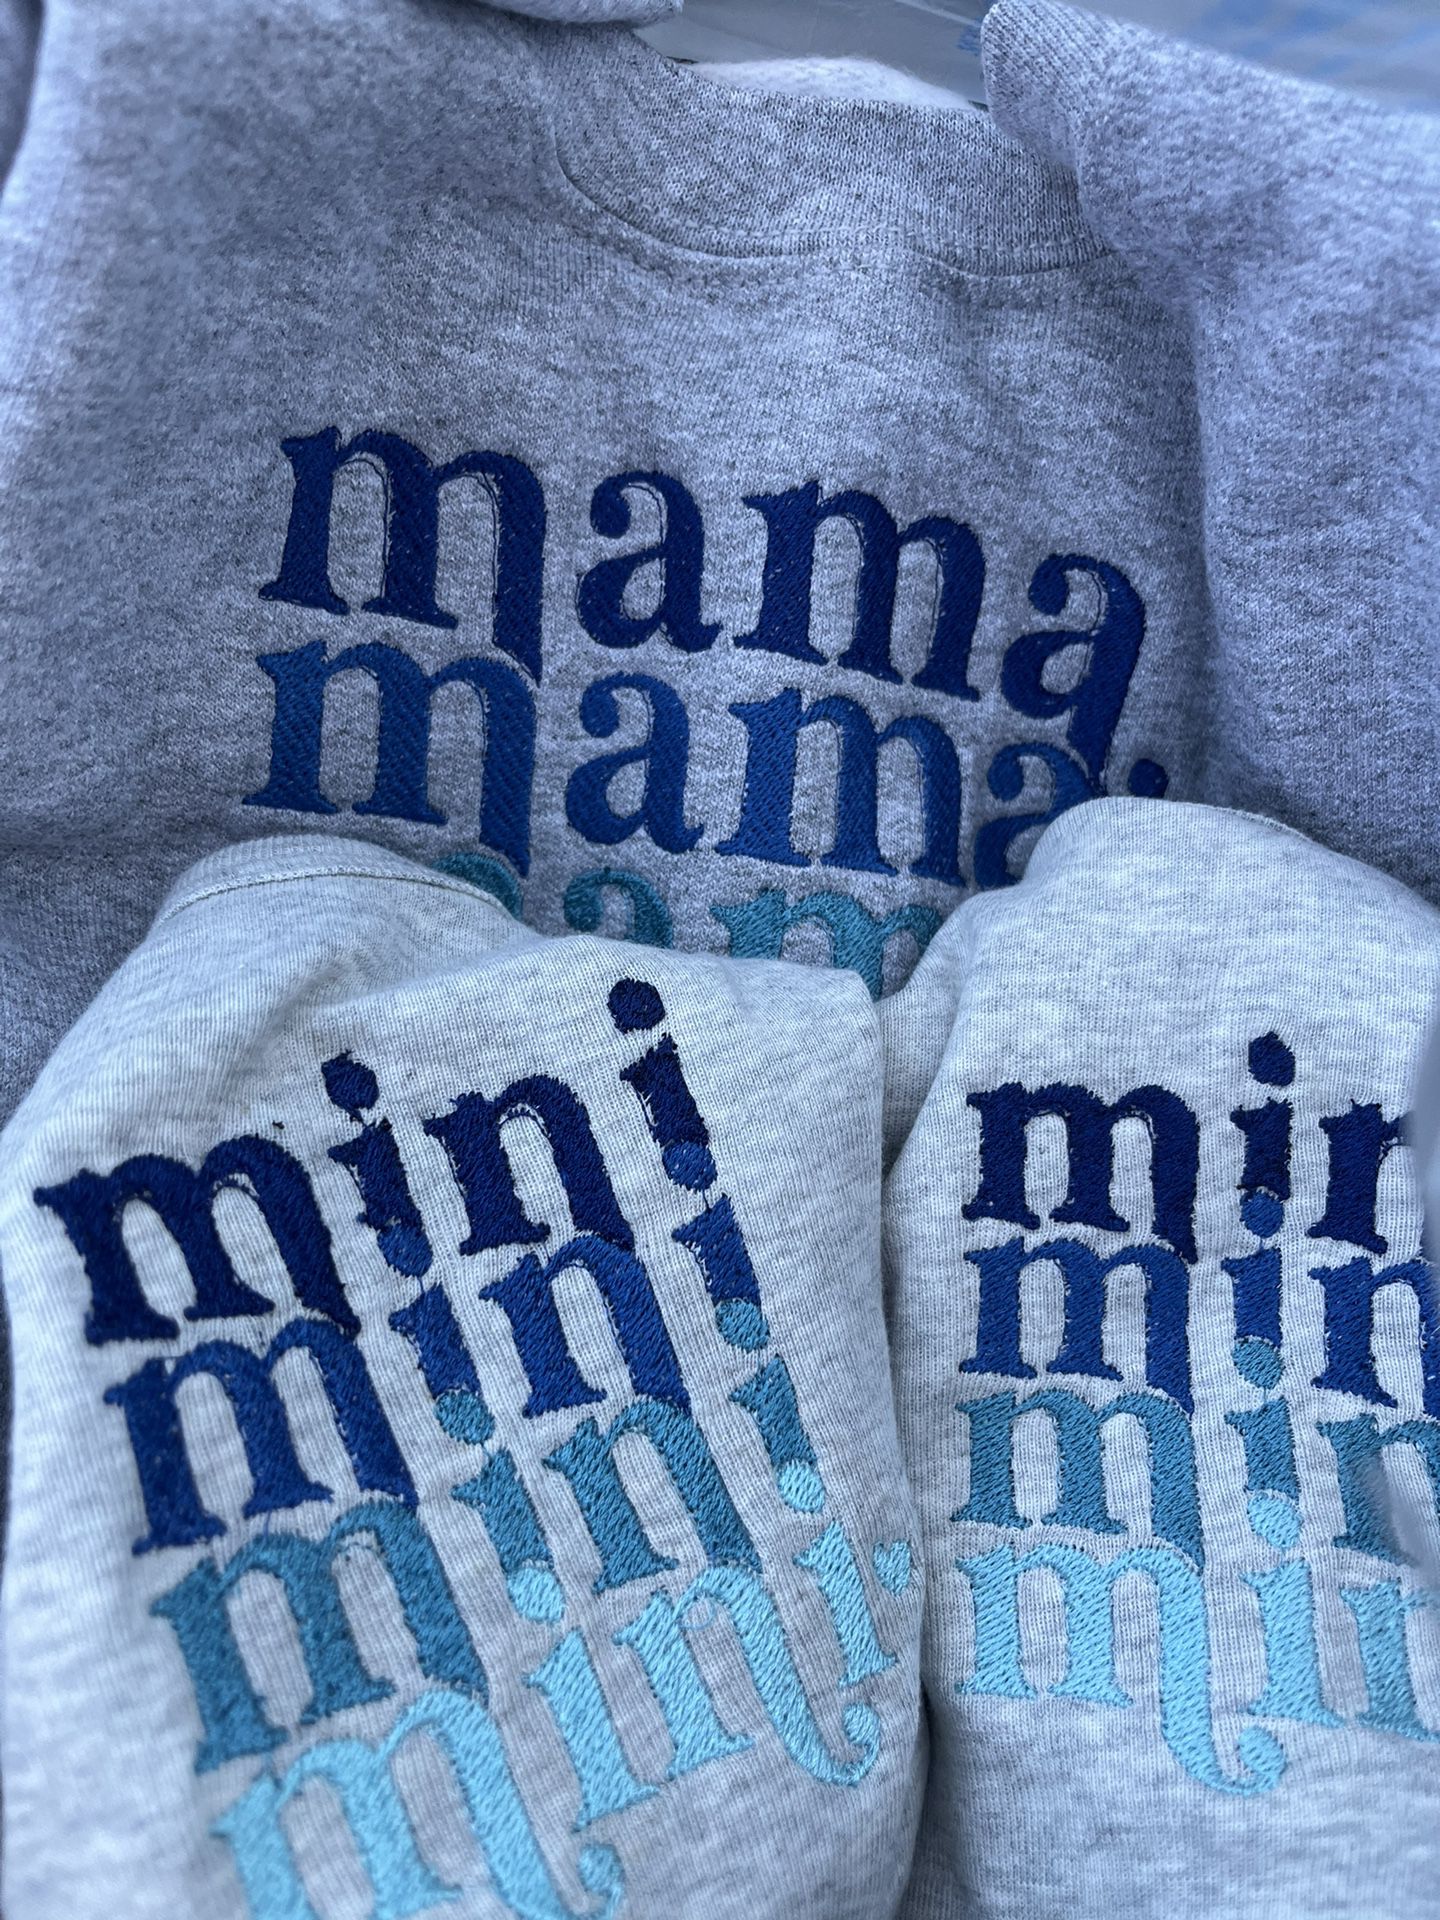 Mini Mama Set!